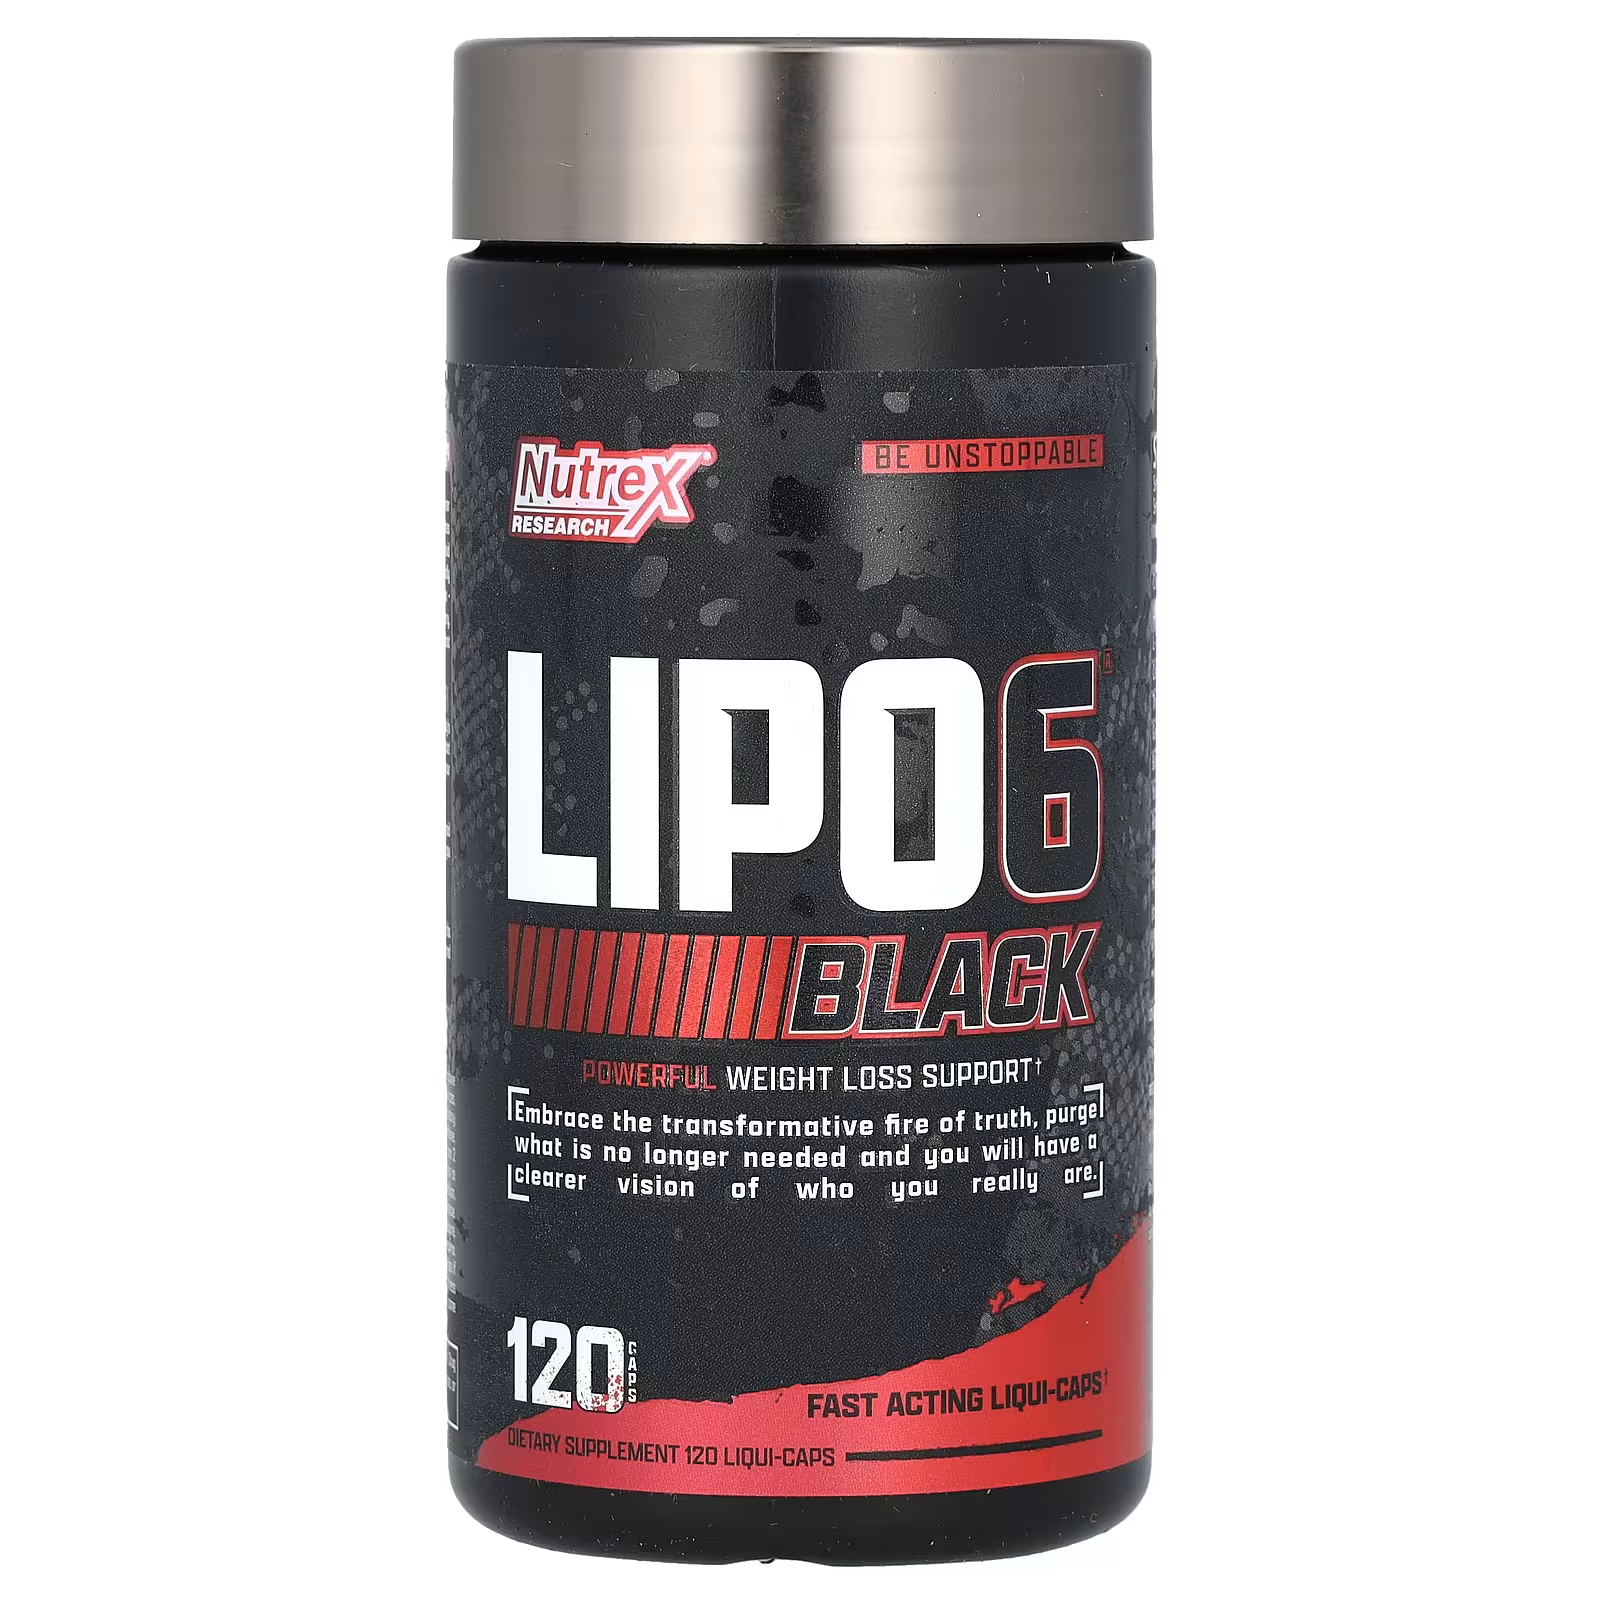 Пищевая добавка Nutrex Research LIPO 6 Black, 120 капсул